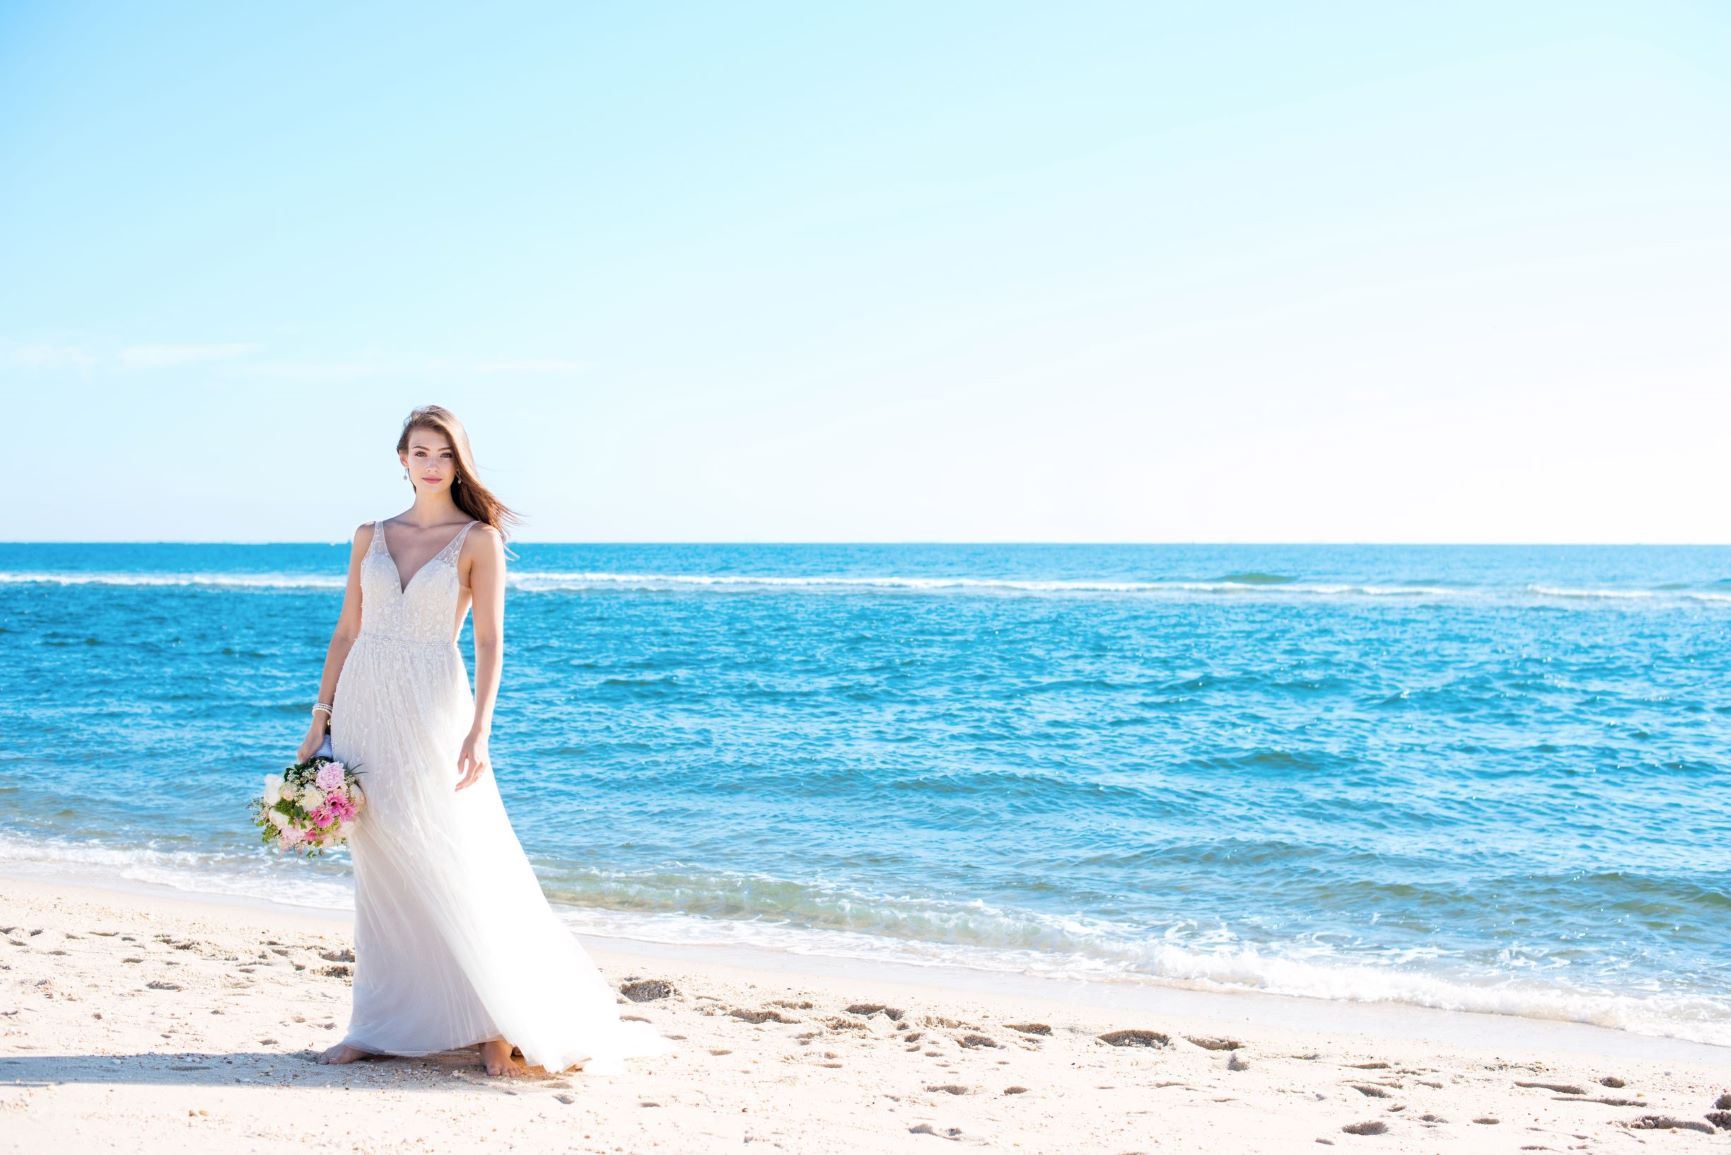 brunette bride wearing white wedding dress on seashore